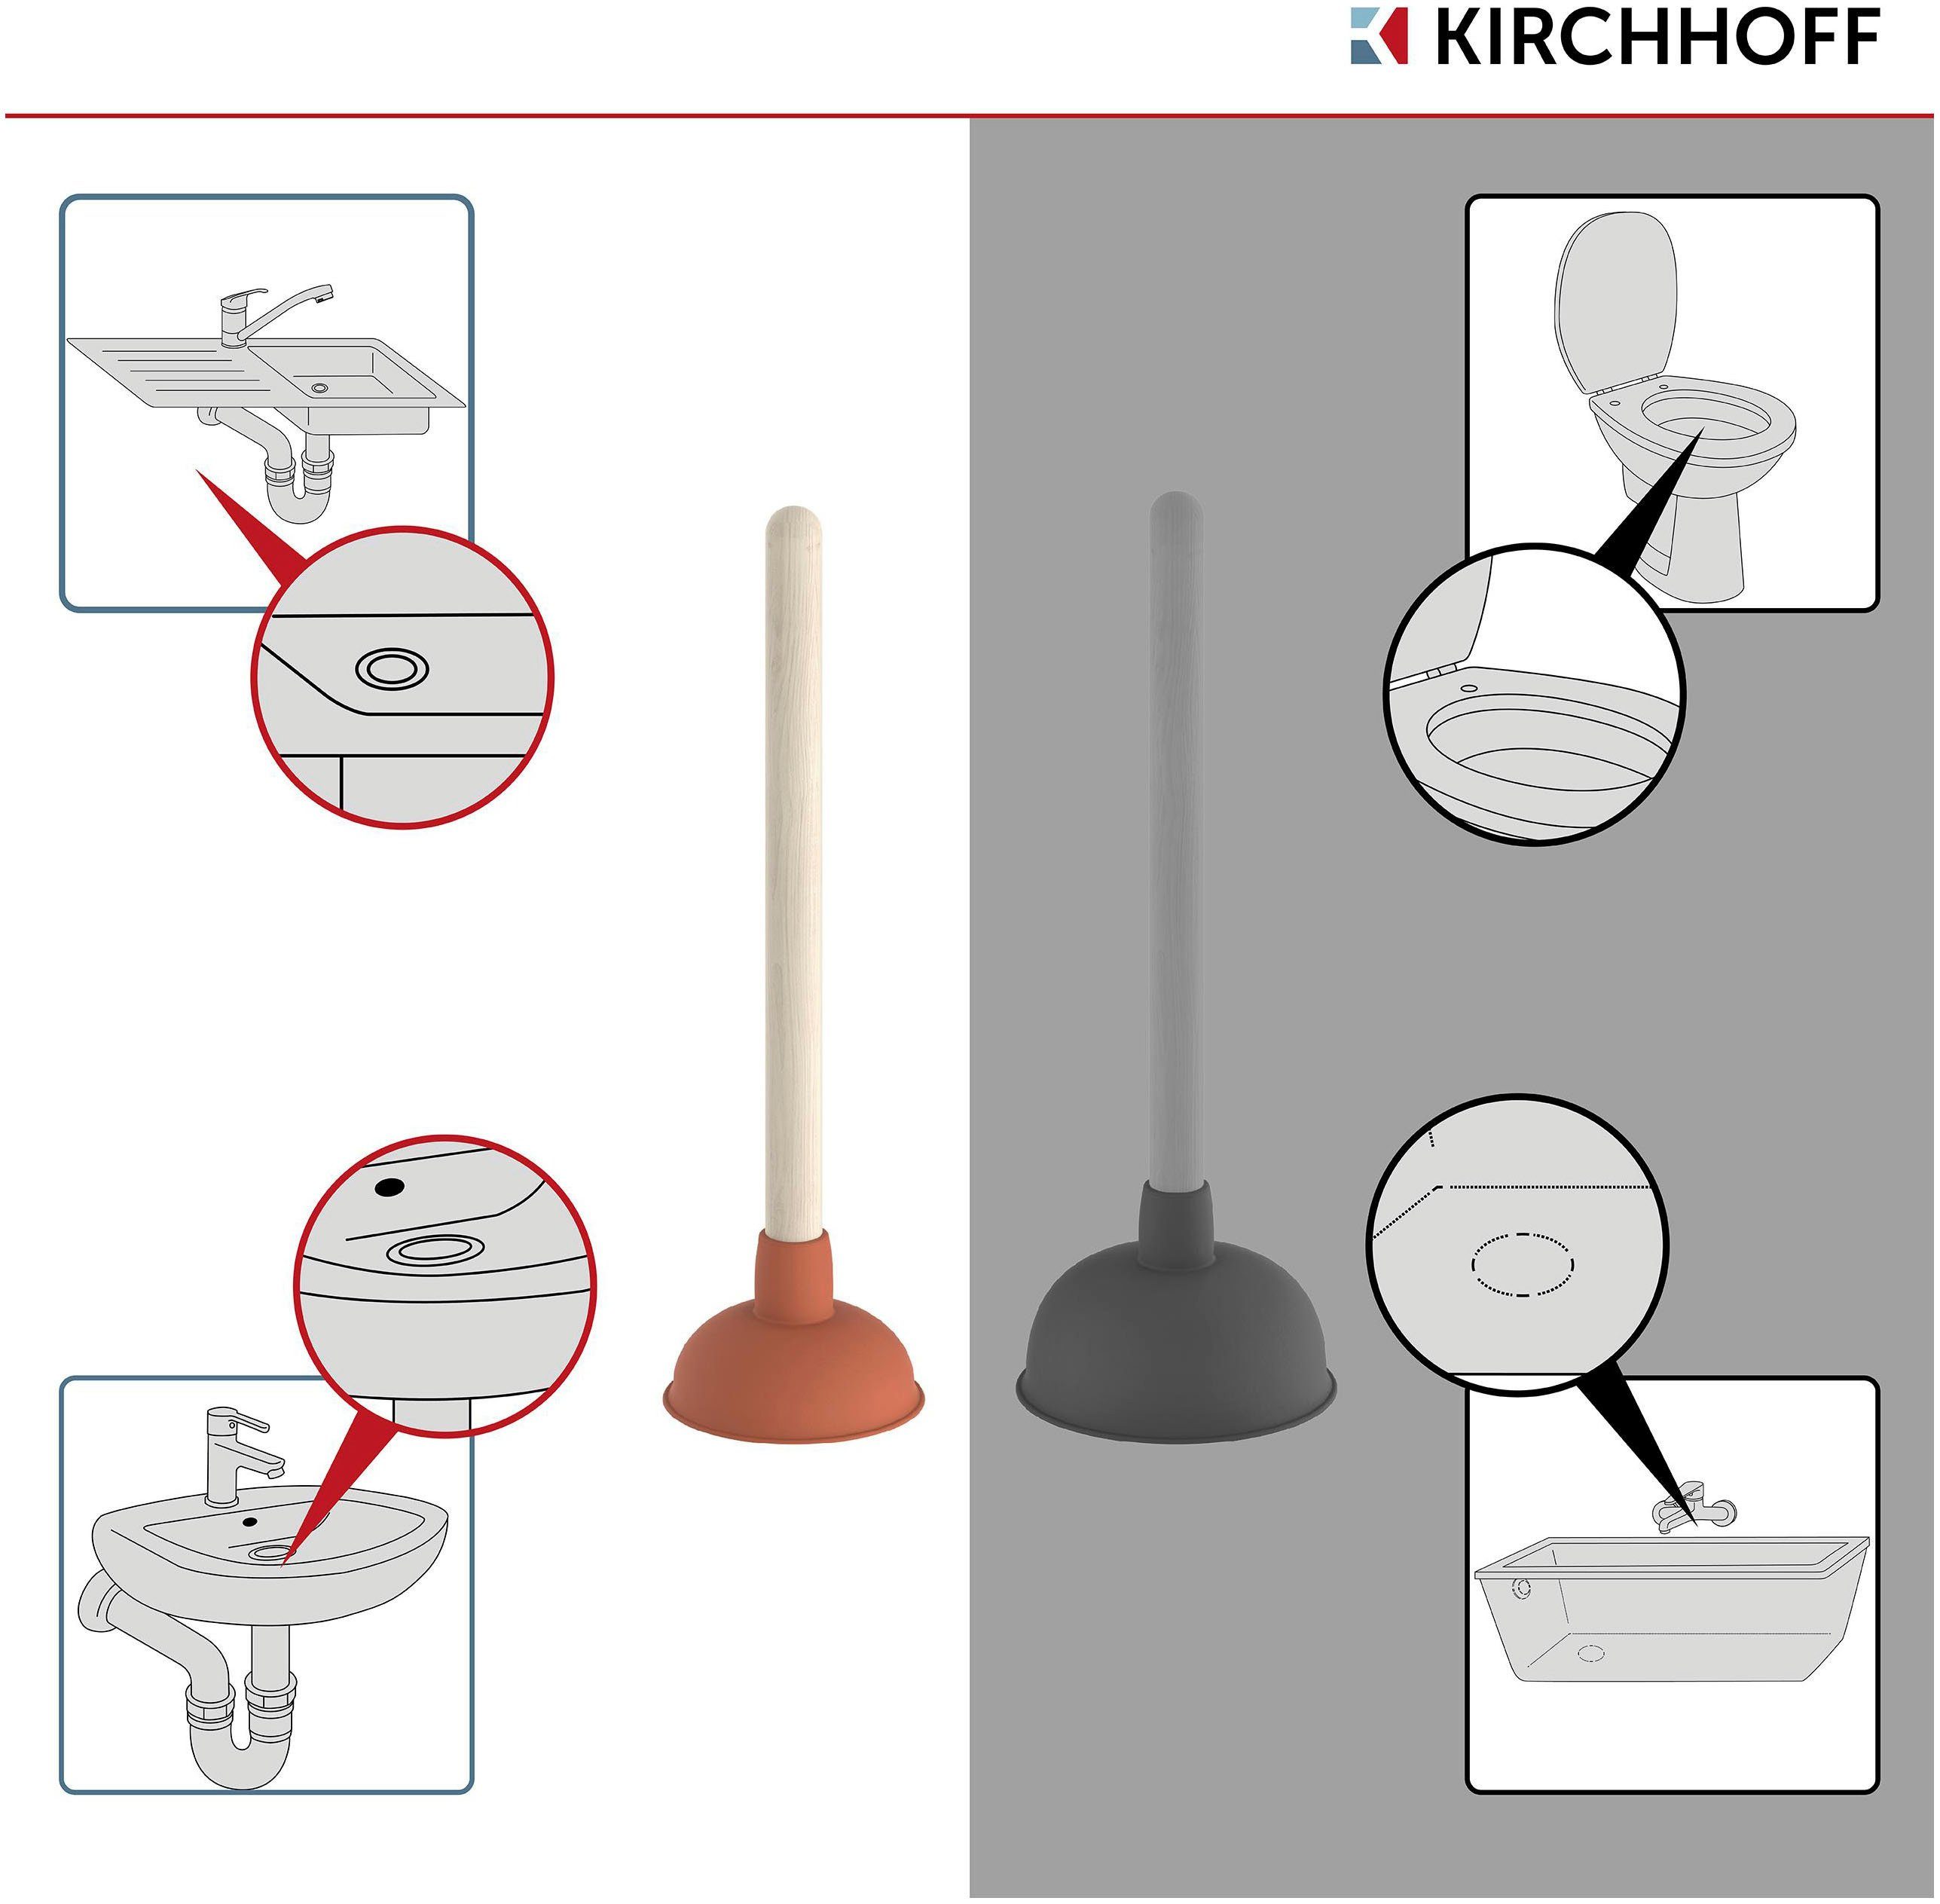 Kirchhoff Pümpel, Abflussreiniger mit Holzgriff, mm Ø 115 Saugglocke